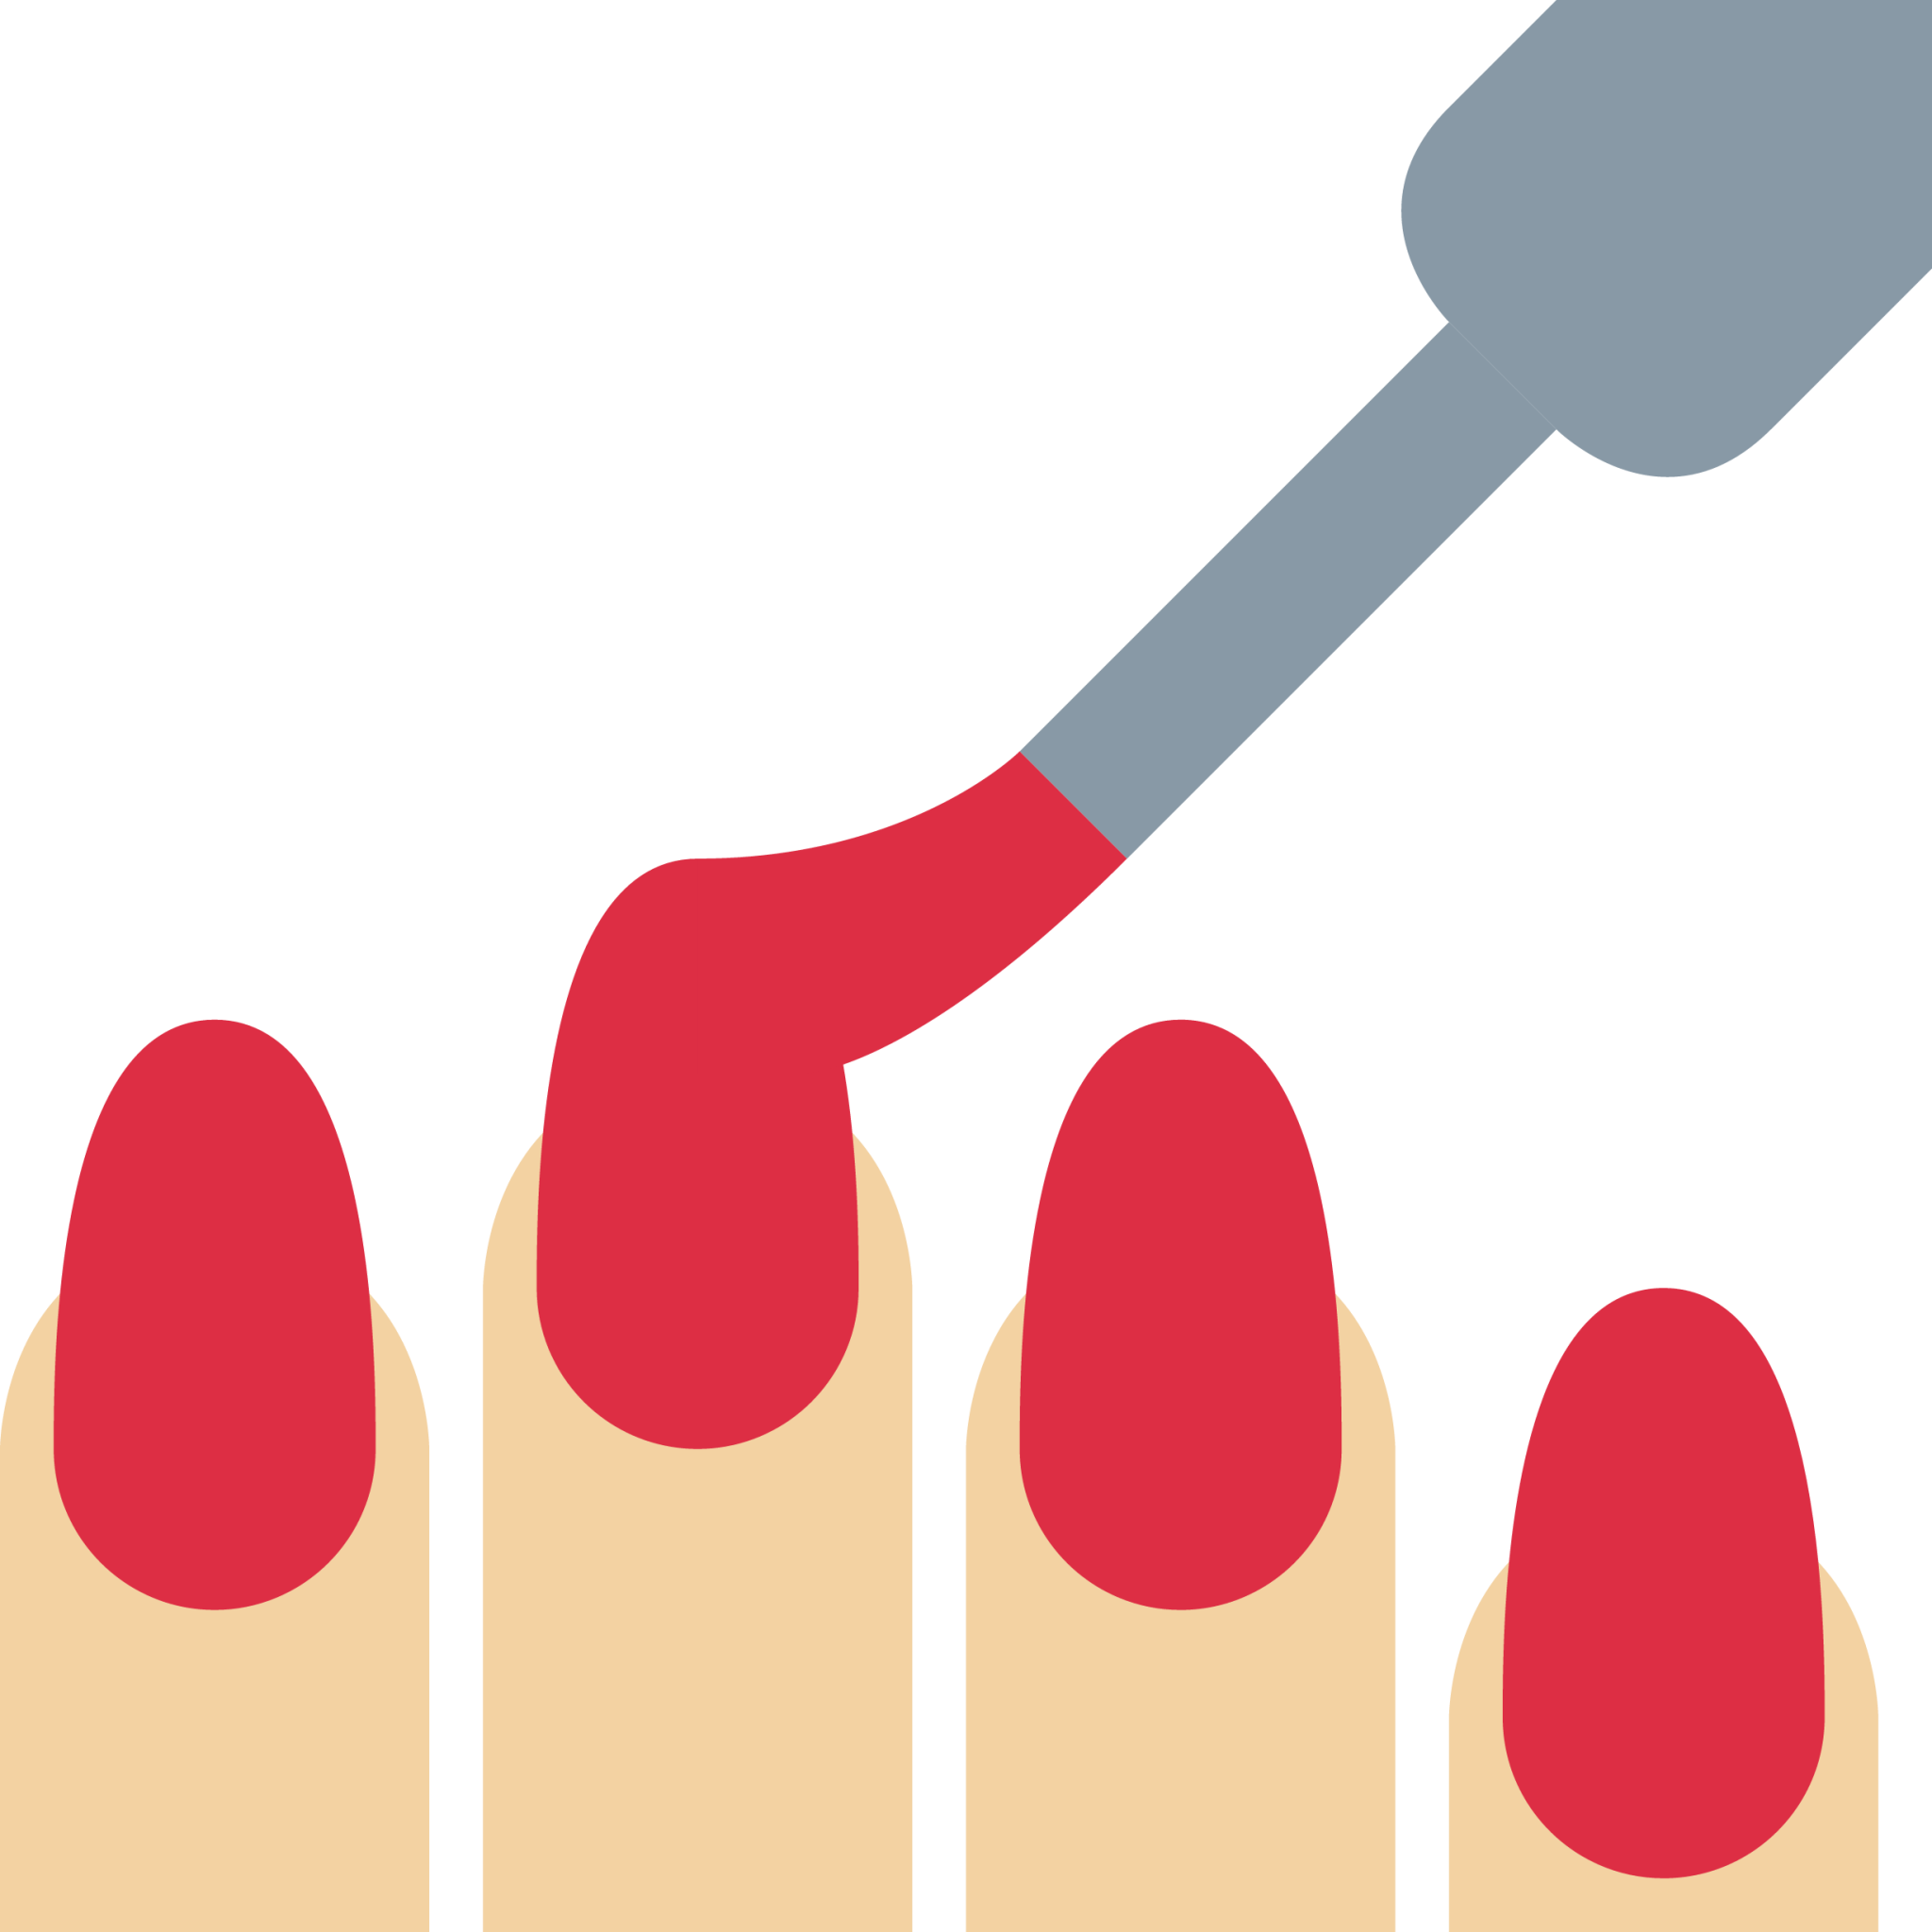 nail polish tone 2 emoji